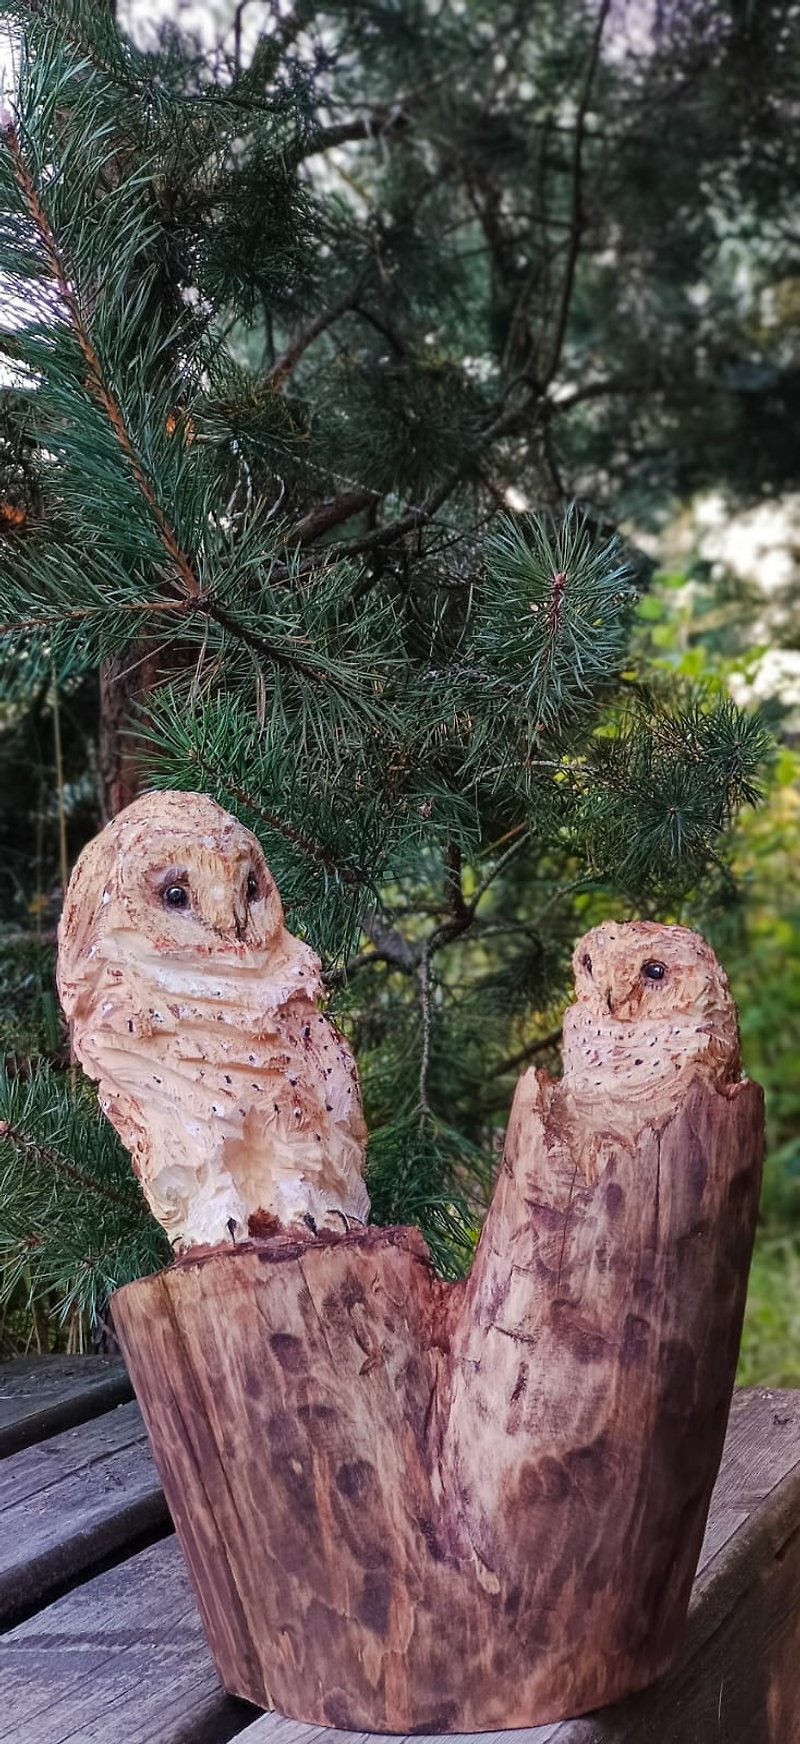 Owl family in wood - Stuffed Dolls & Figurines - Wood Brown